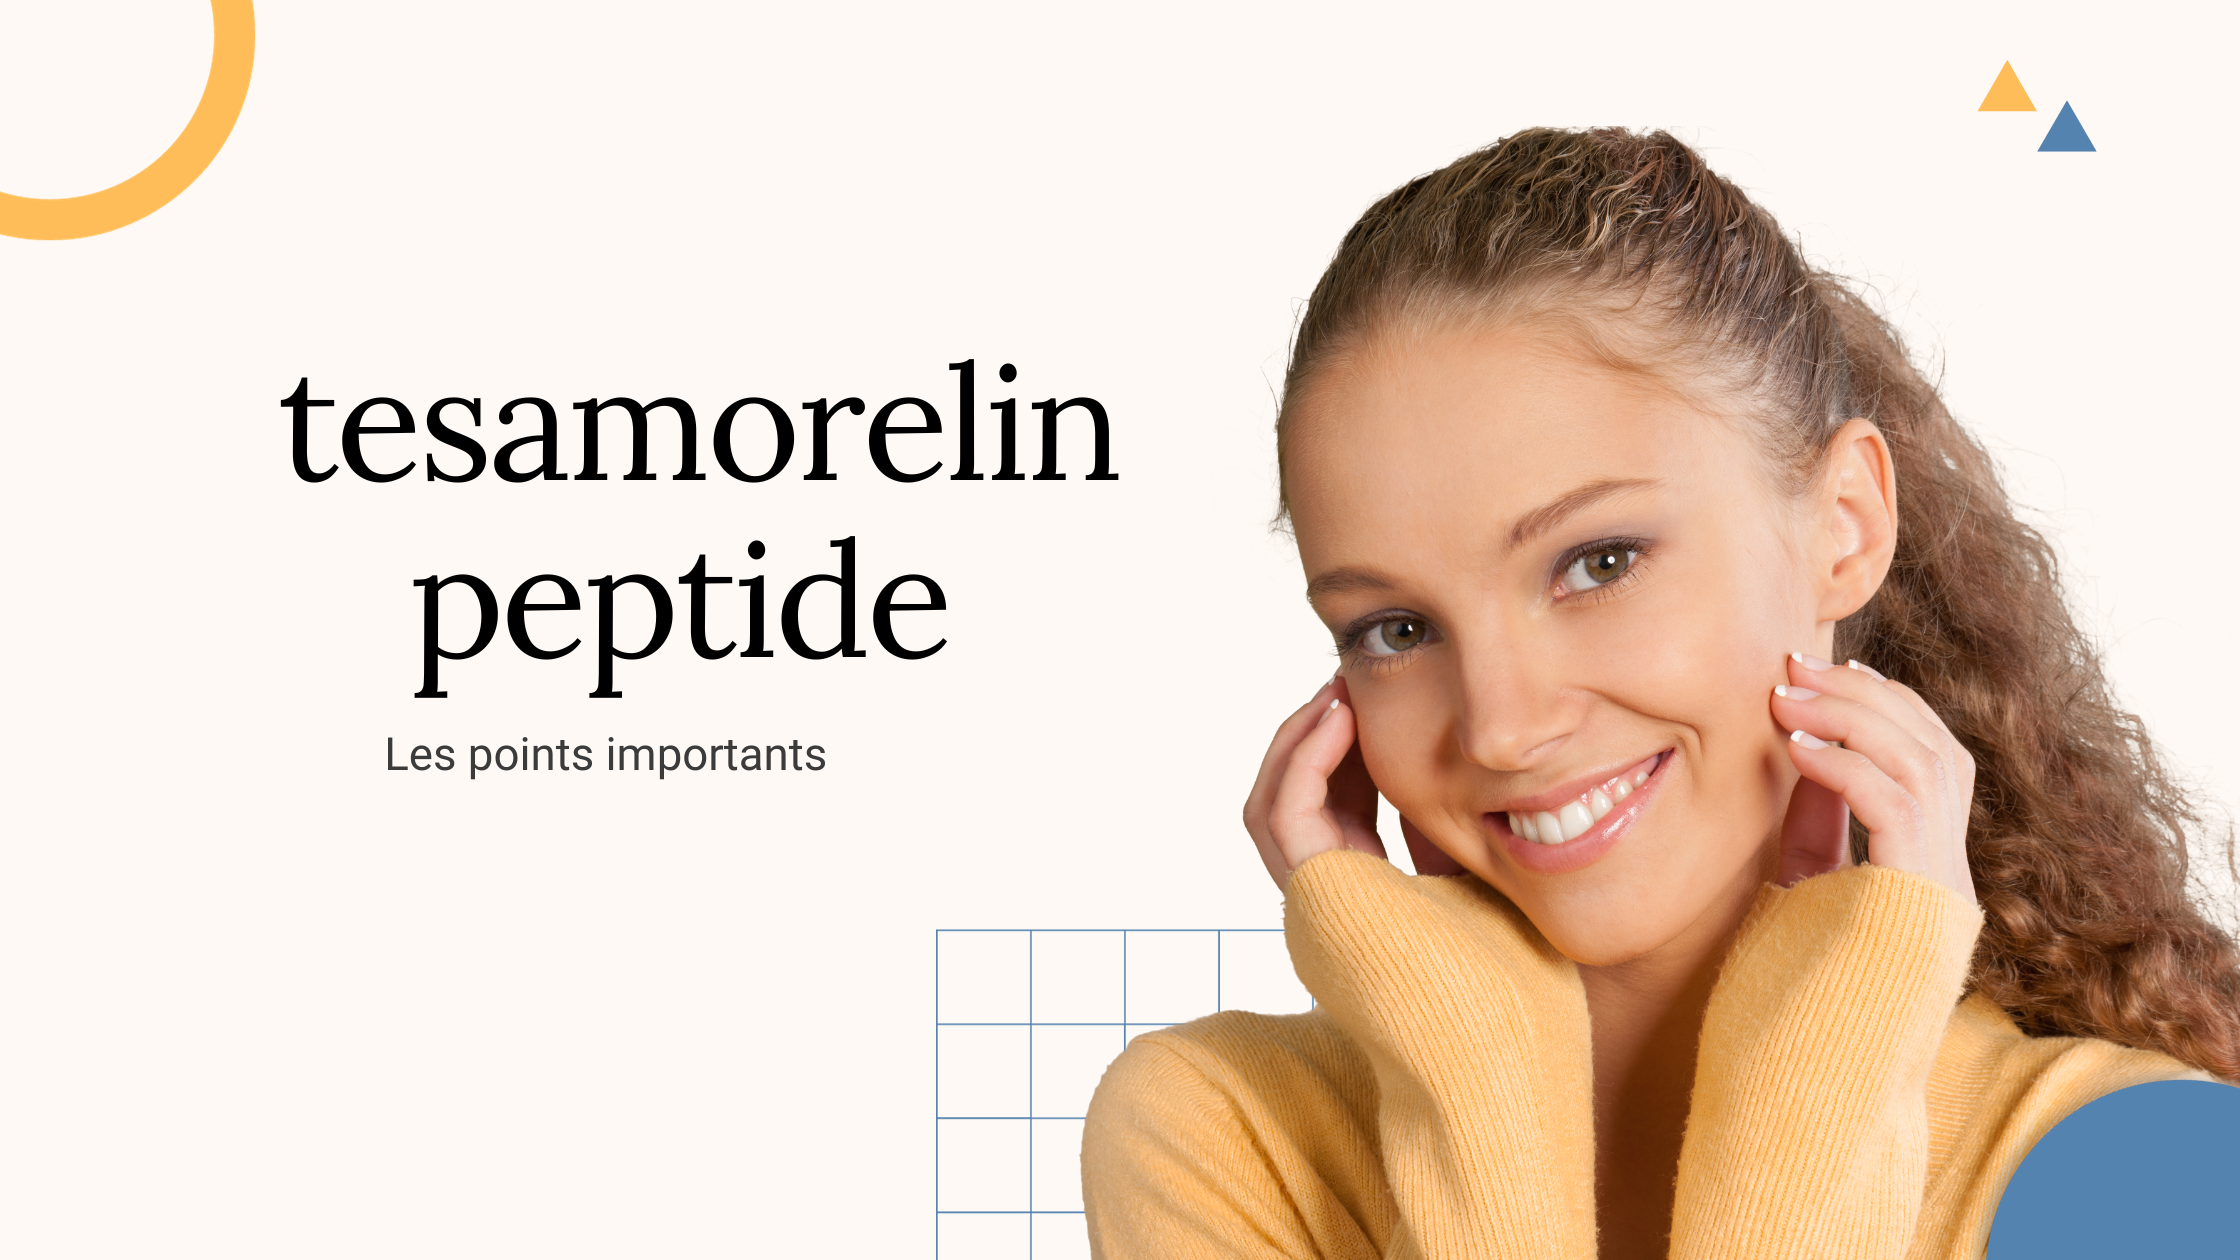 tesamorelin peptide | Les points importants